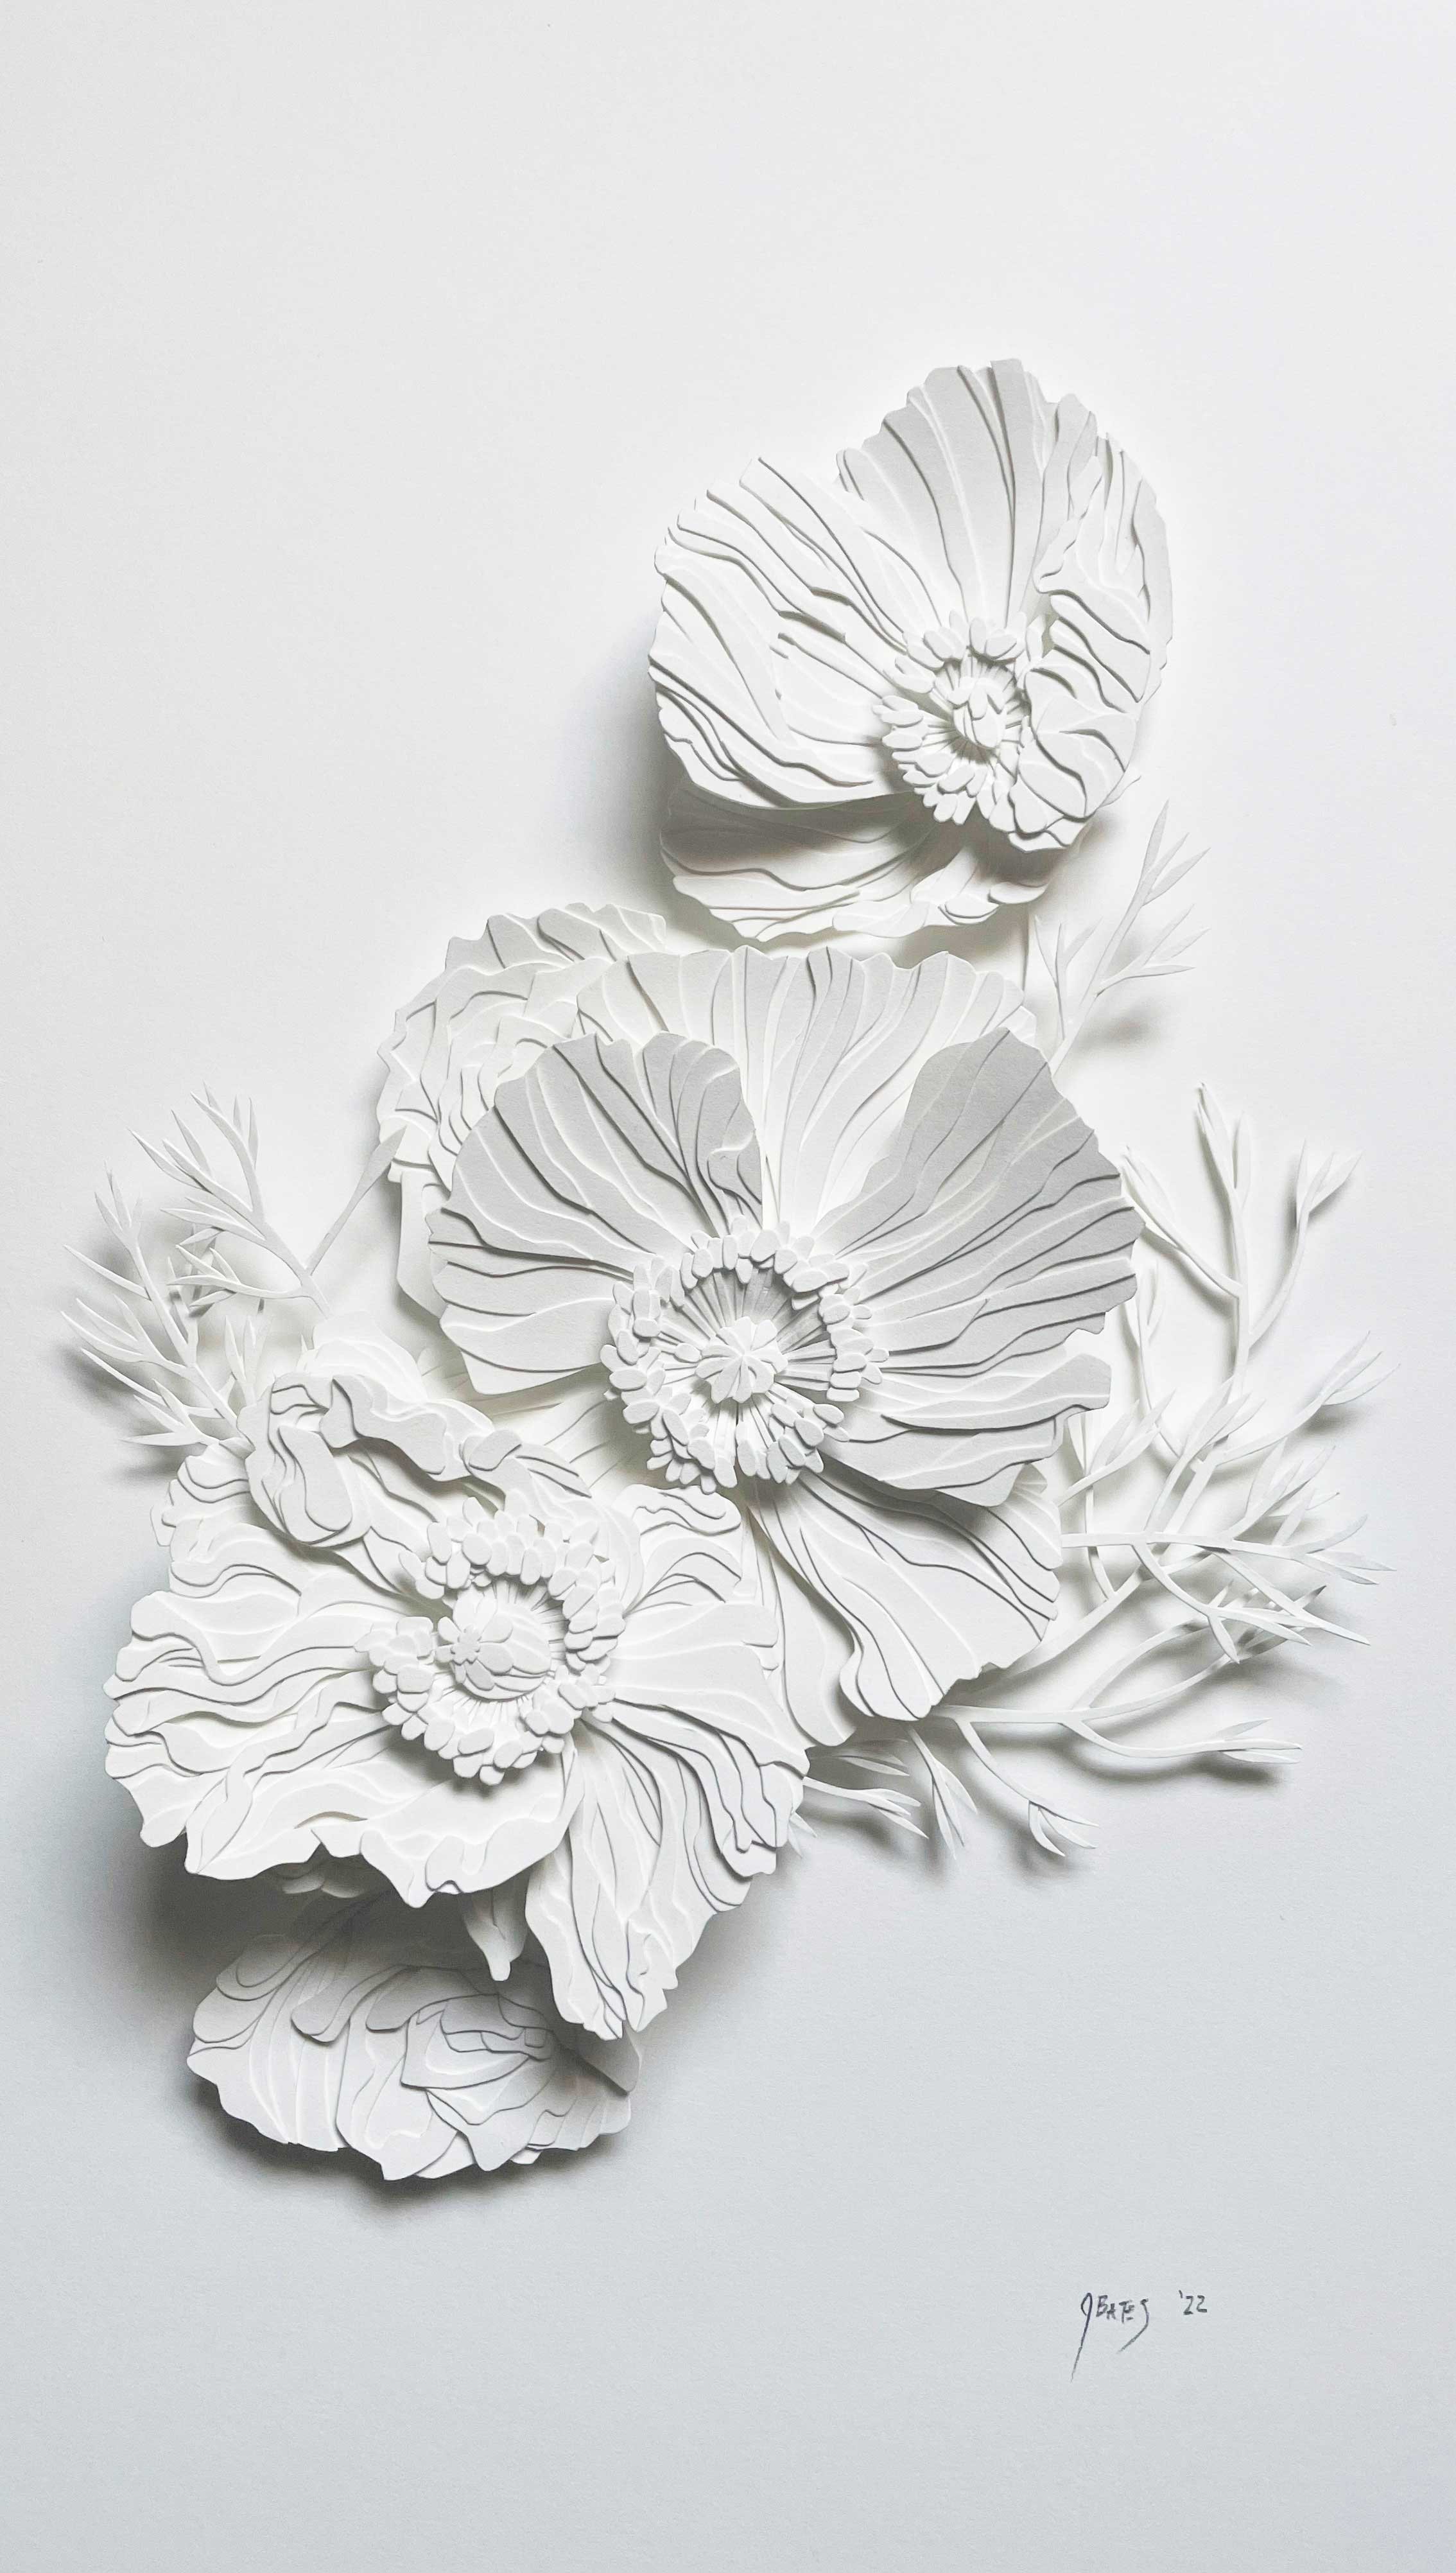 joey-bates-paper-art-sculpture-commission-4.jpg